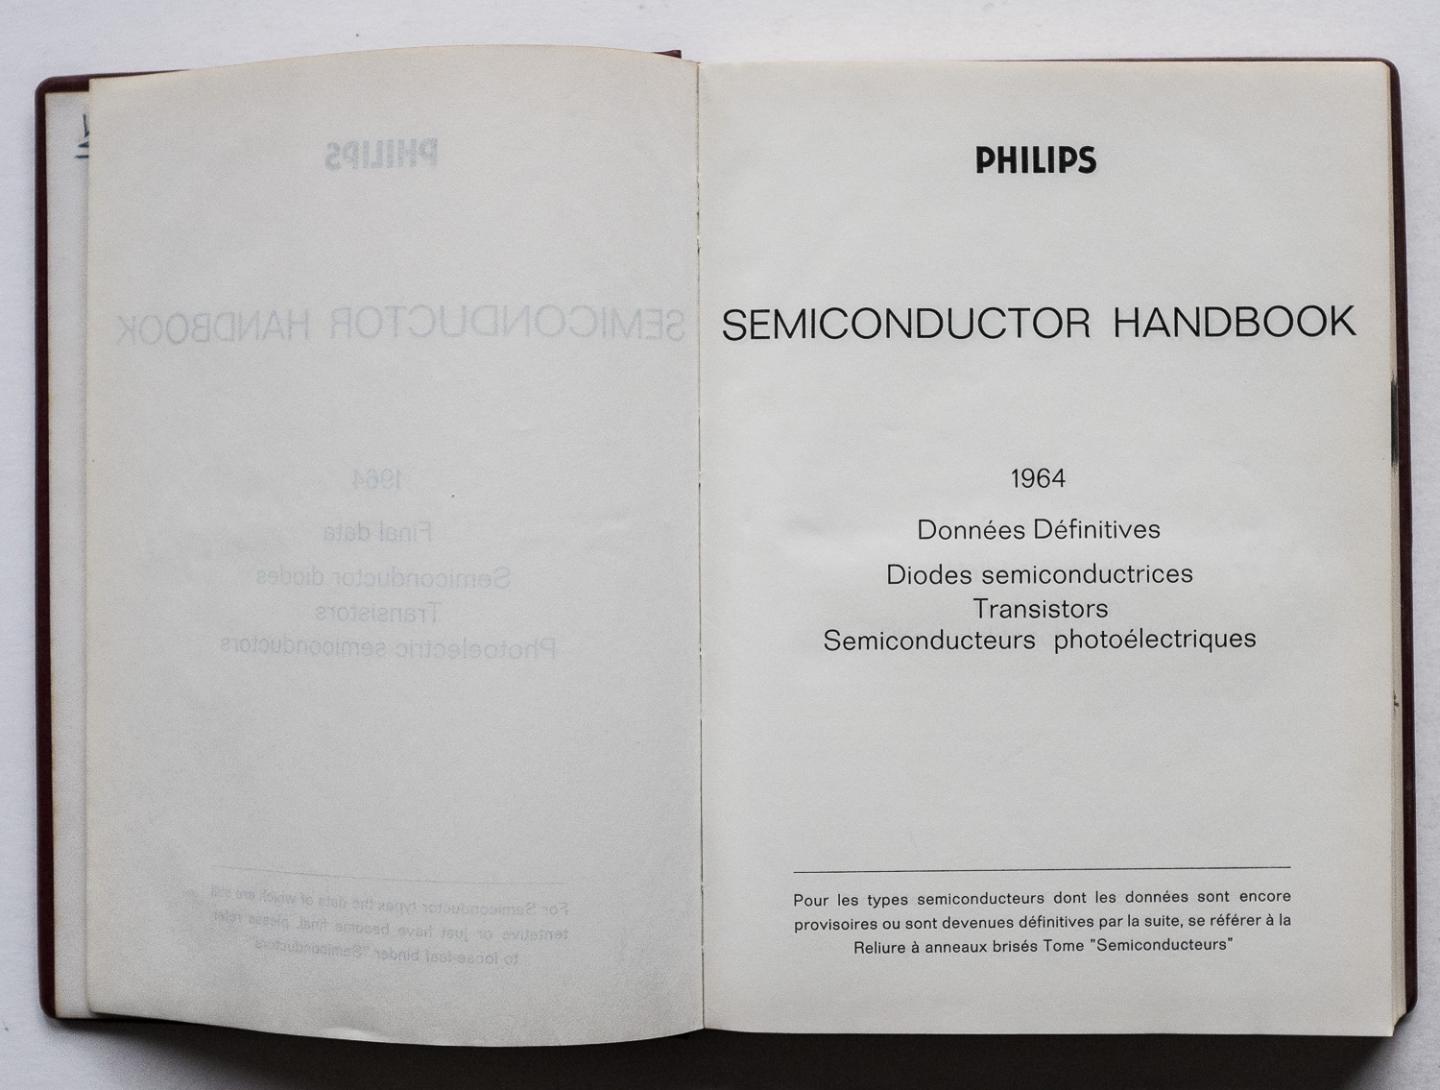  - Semiconductor Handbook - Final data, Semiconductor diodes, Transistors, Photoelectric semiconductors